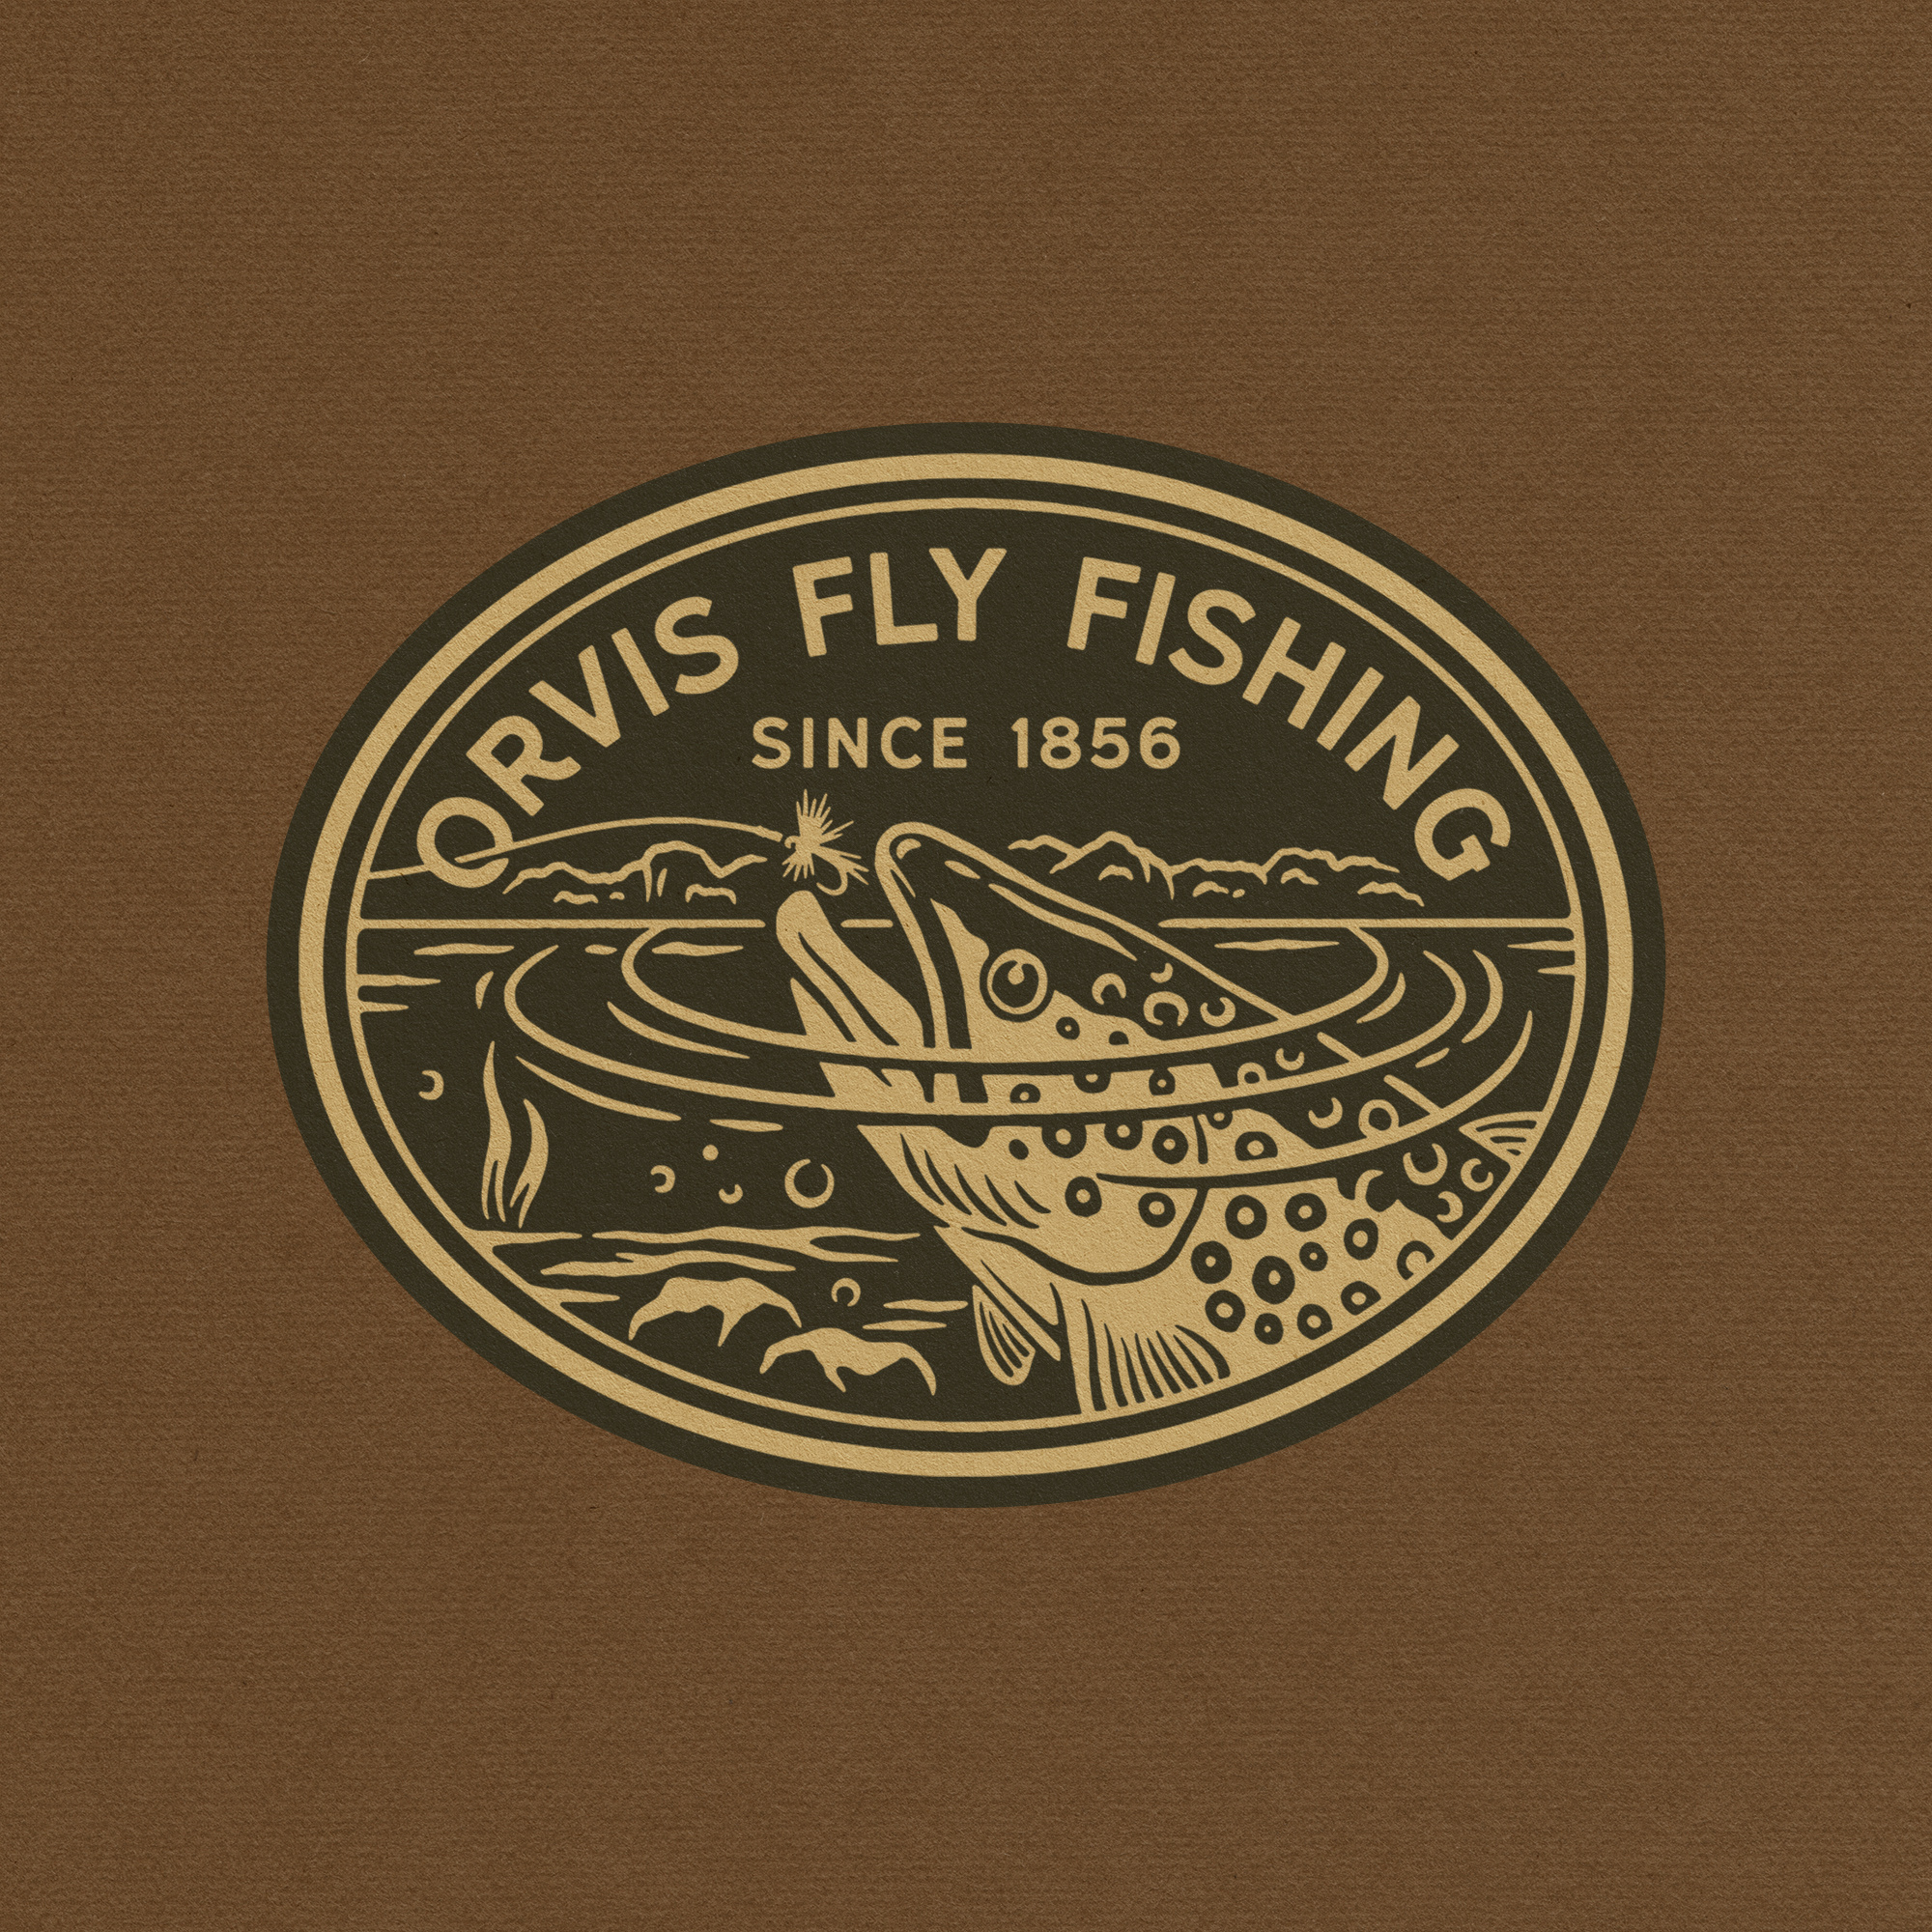 Orvis Fly Fishing